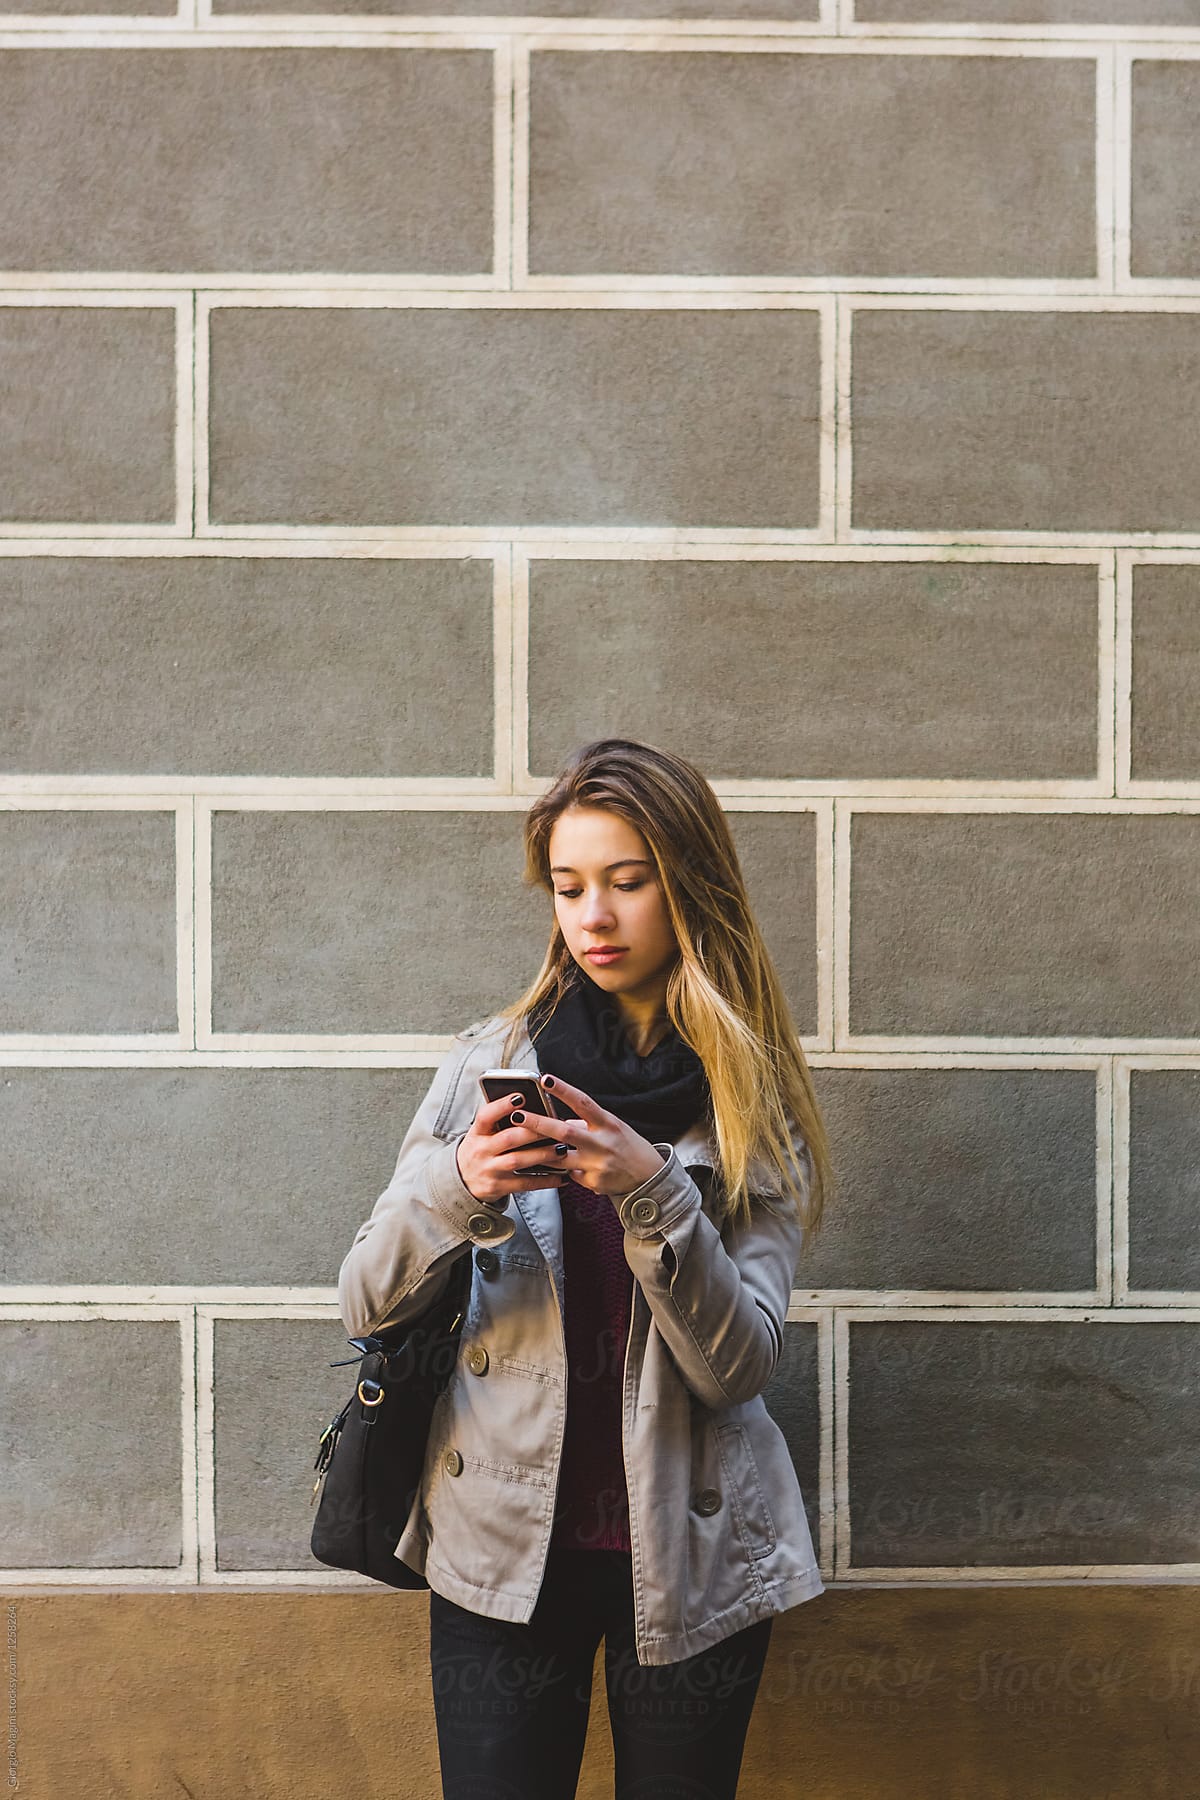 Teenage Girl in Urban Area Using a Mobile Phone